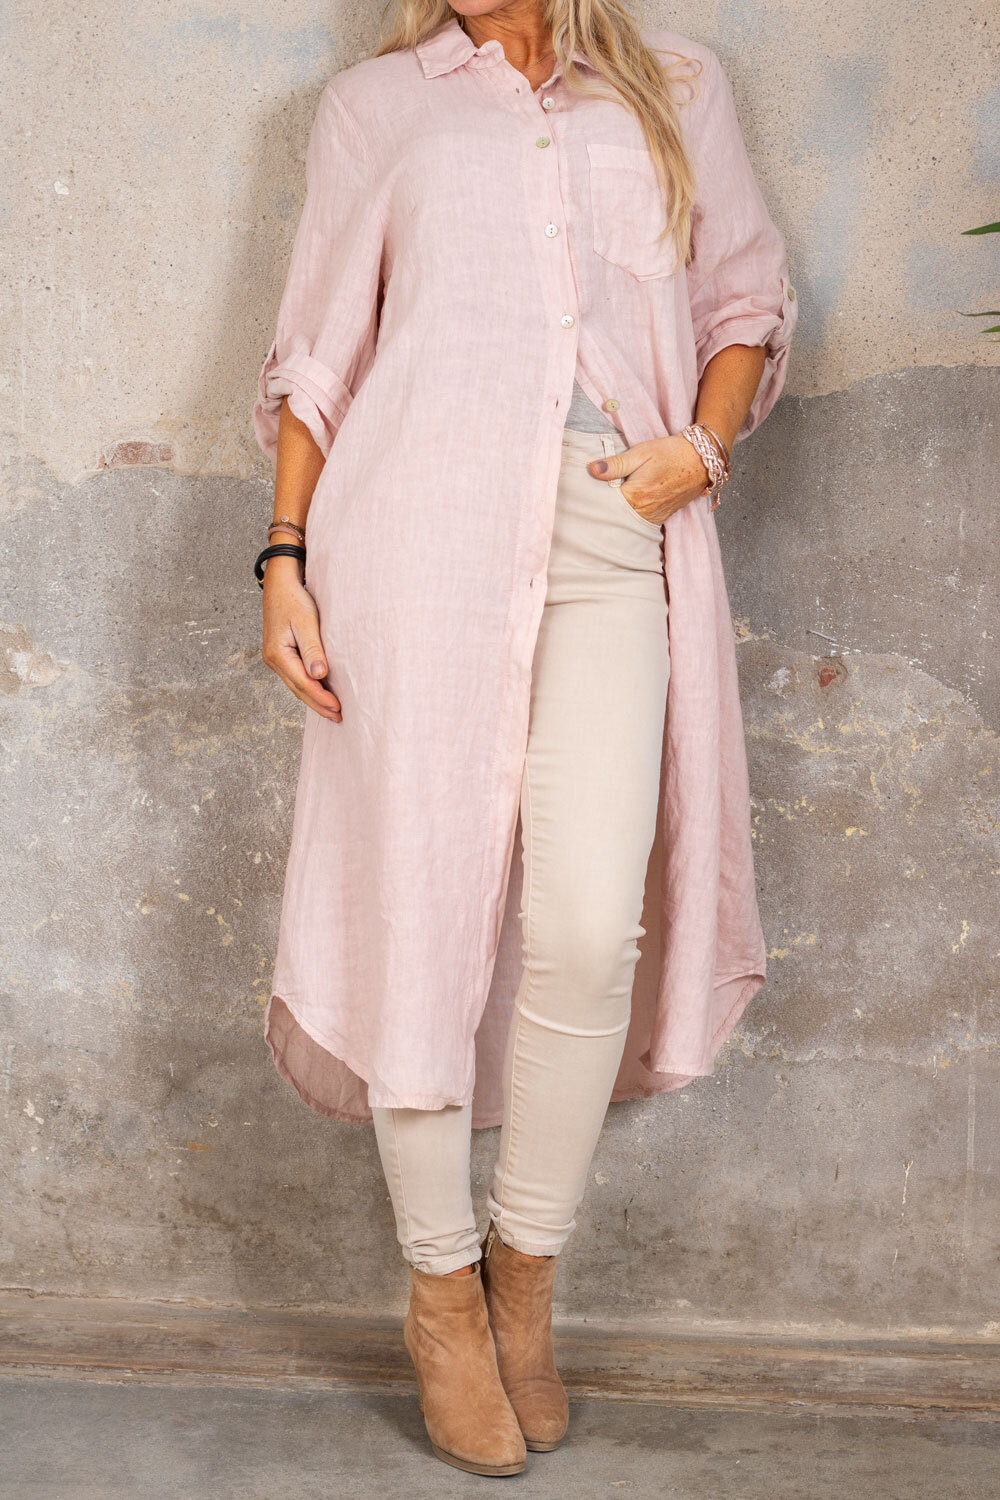 Tilda Long linen shirt - Old pink